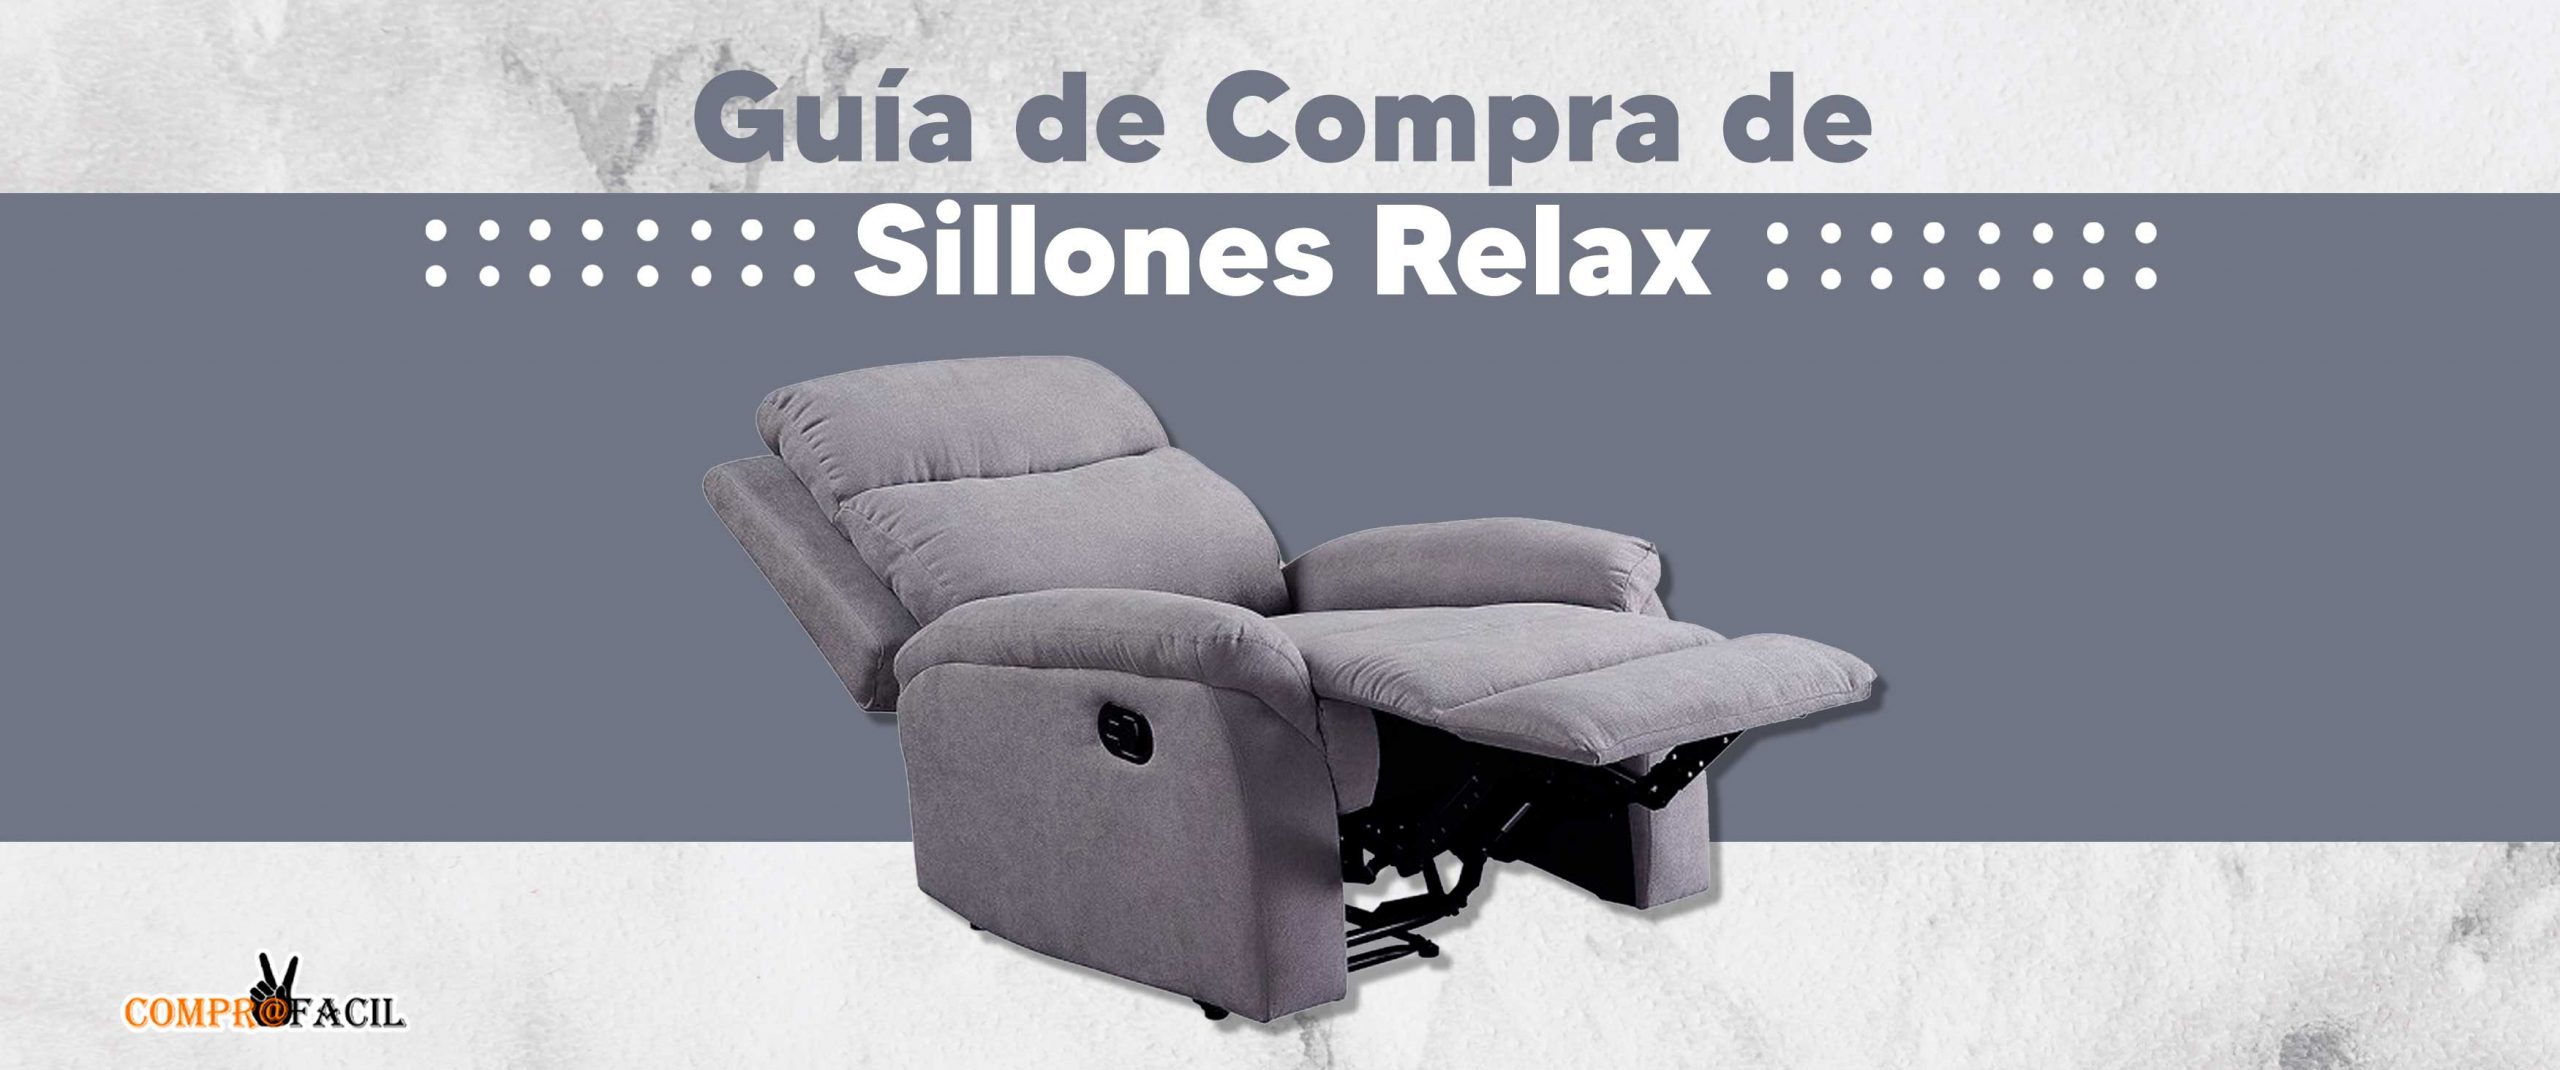 Guía de Compra de Sillones Relax